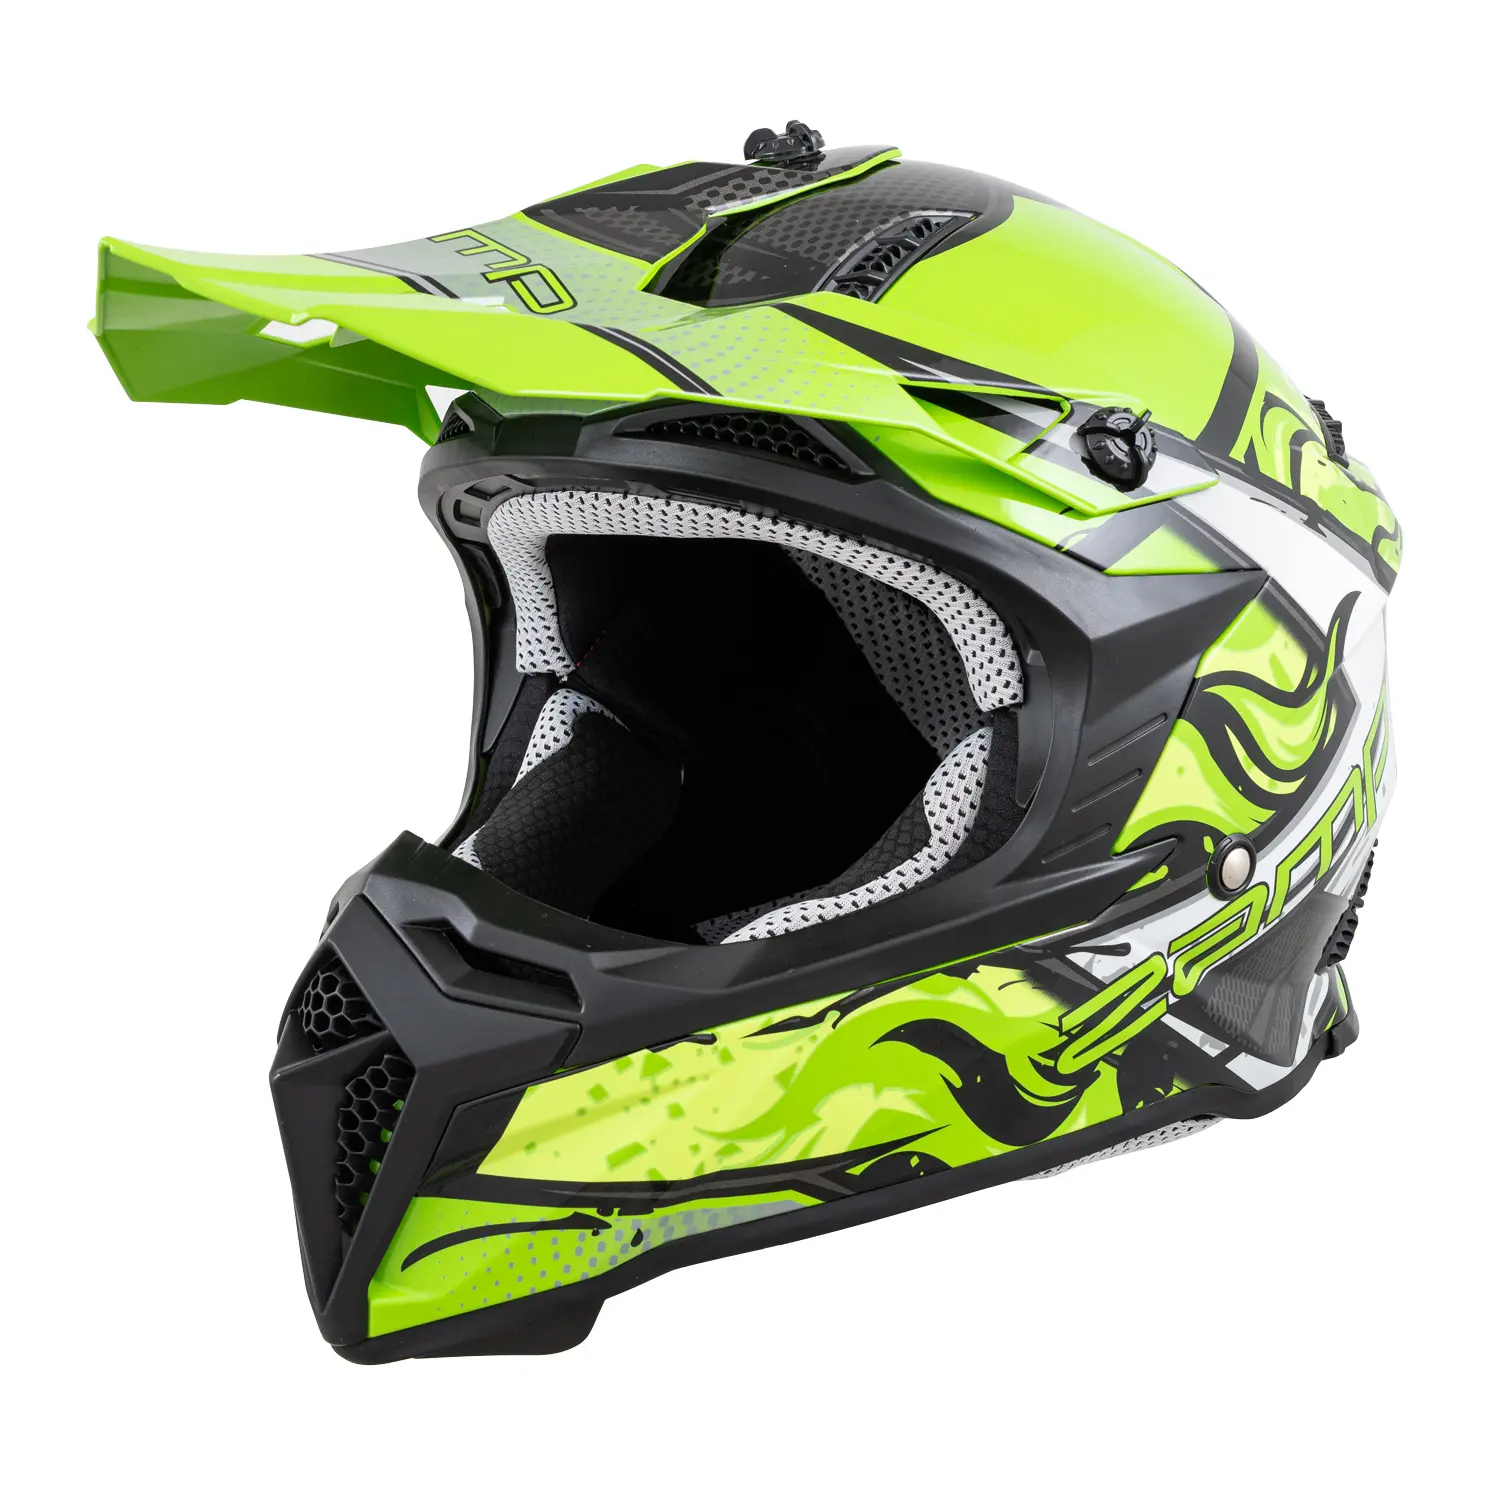 FX-4 Graphic Motocross Helmet